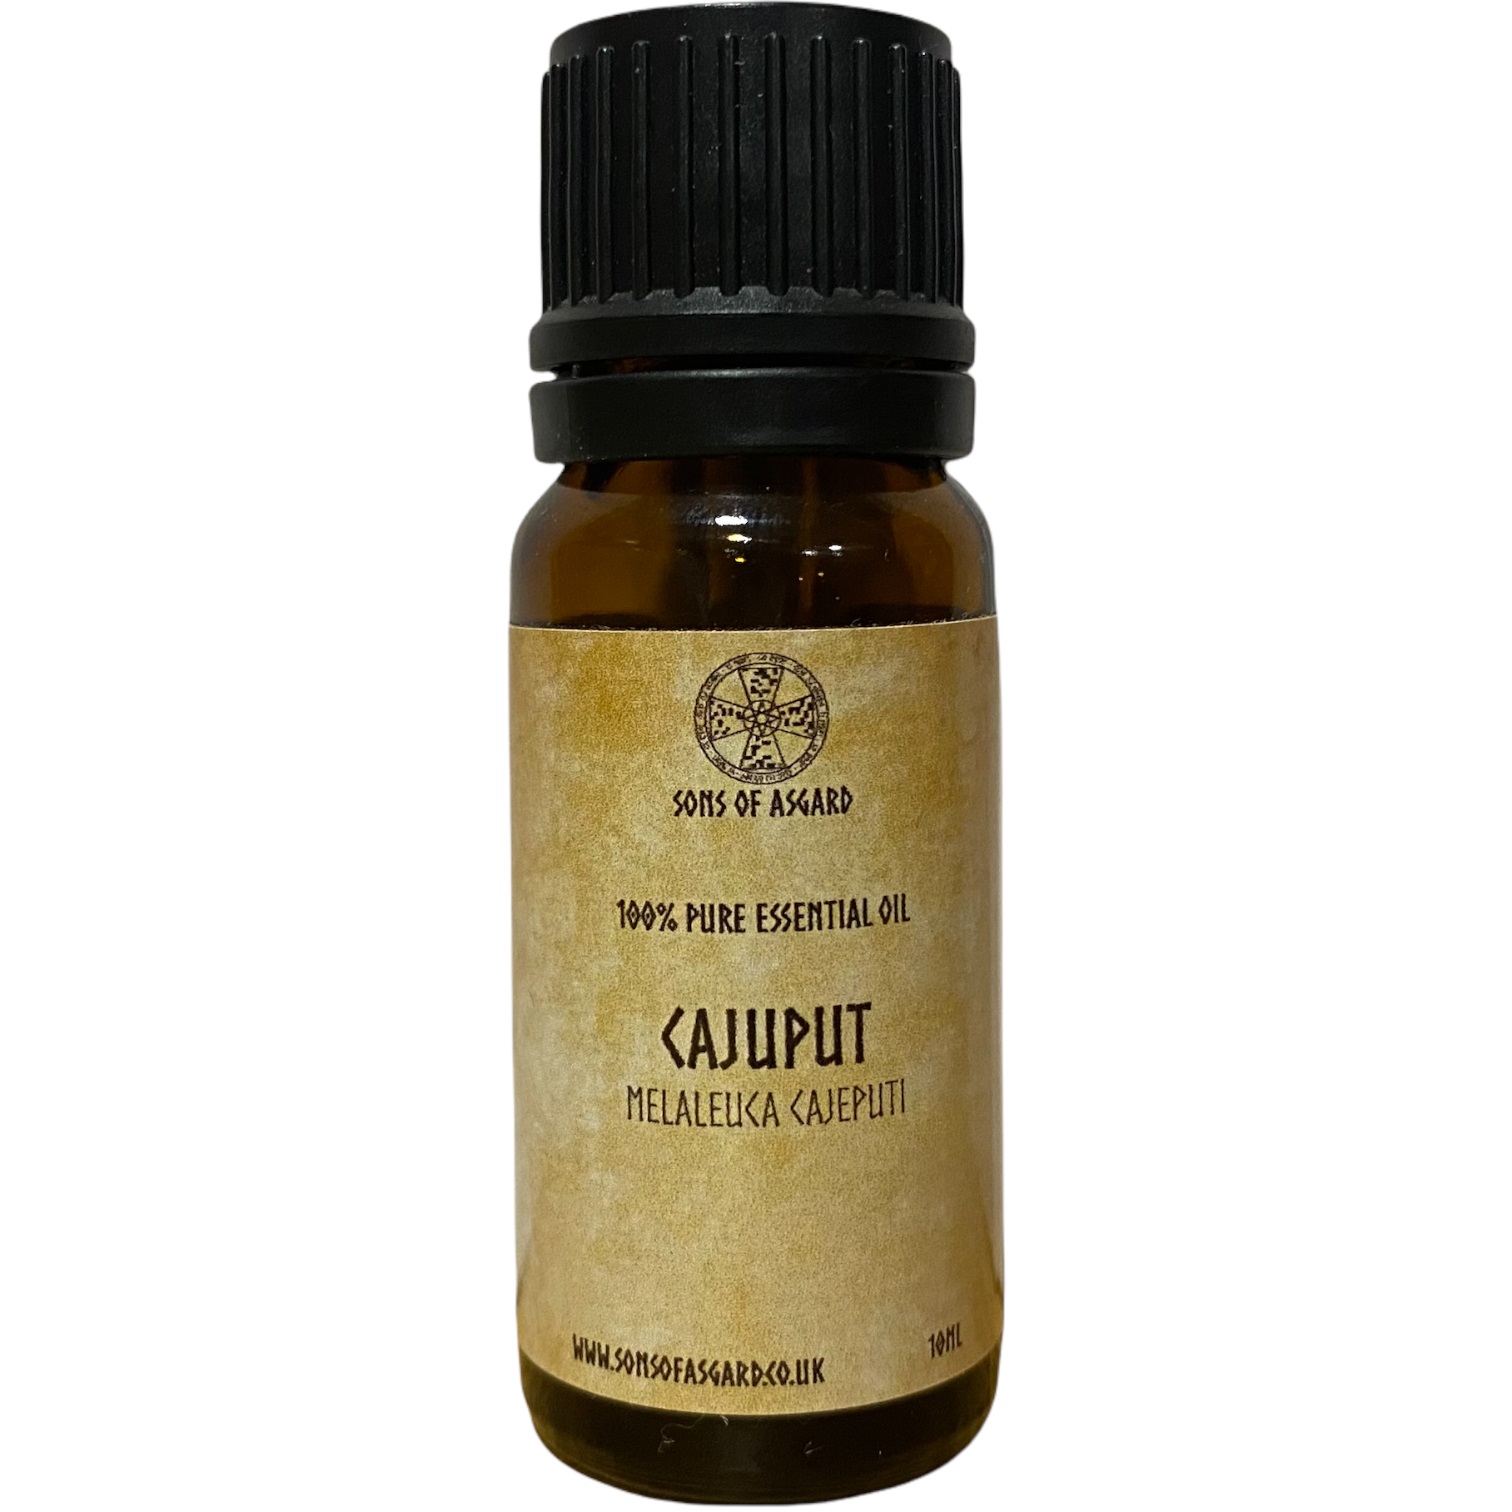 Cajeput - Pure Essential Oil